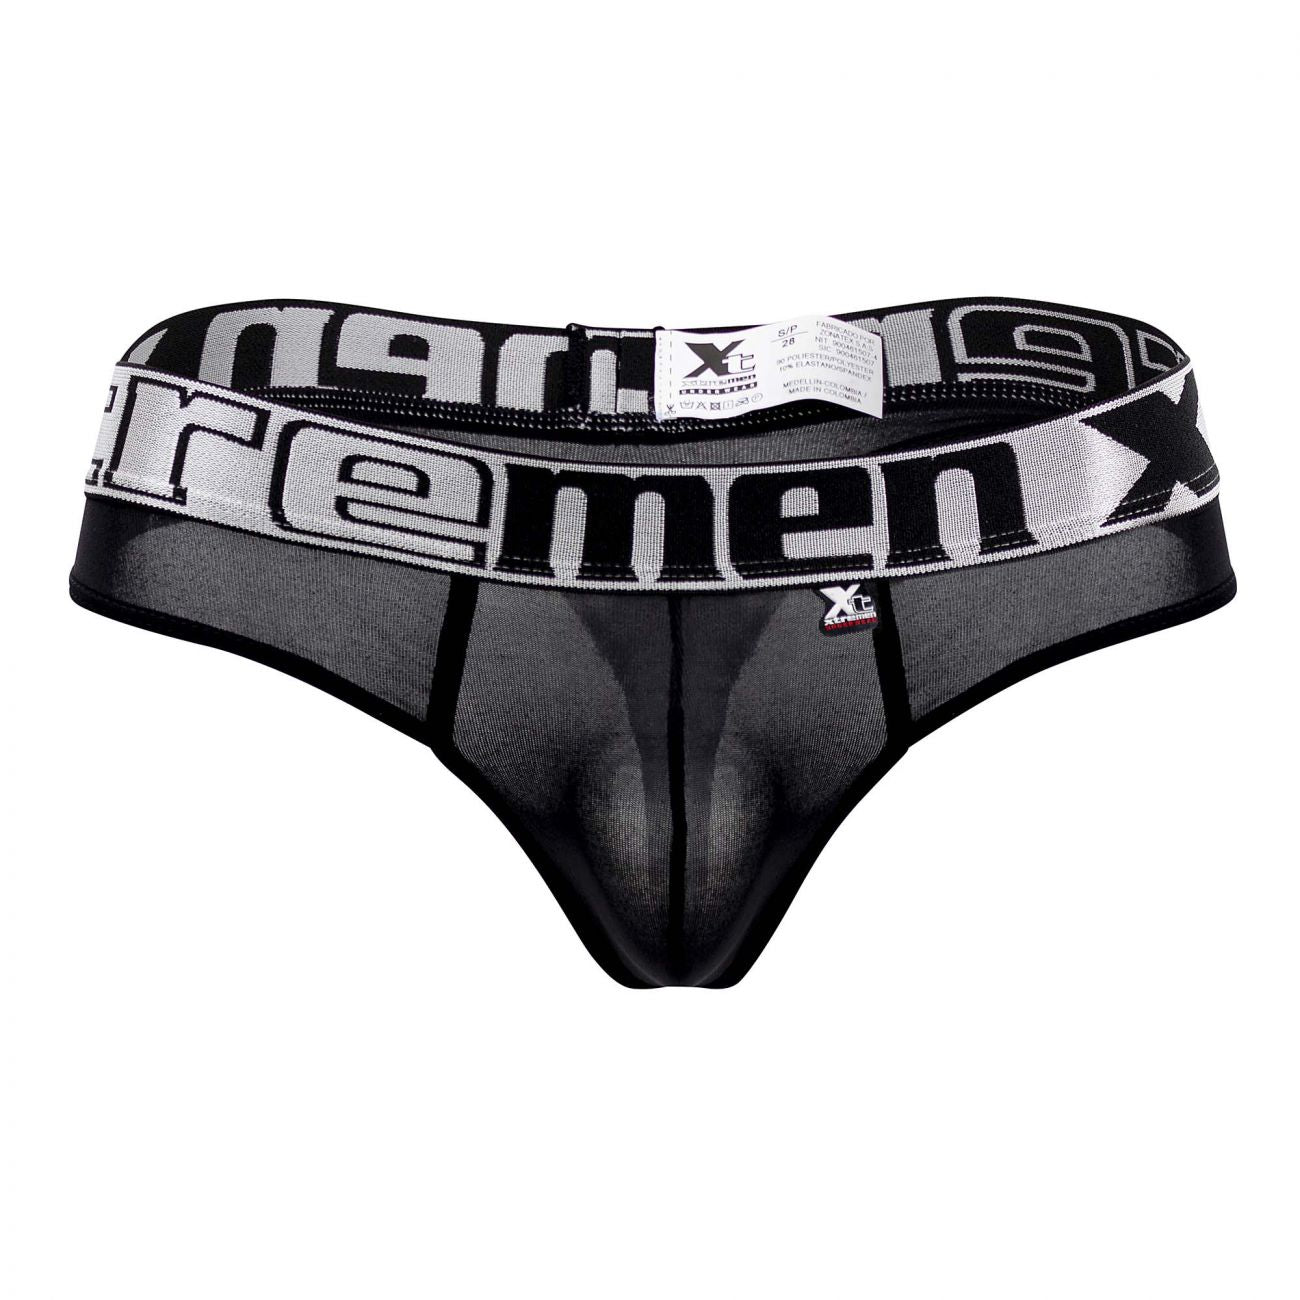 Xtremen 91094 Microfiber Thongs Black